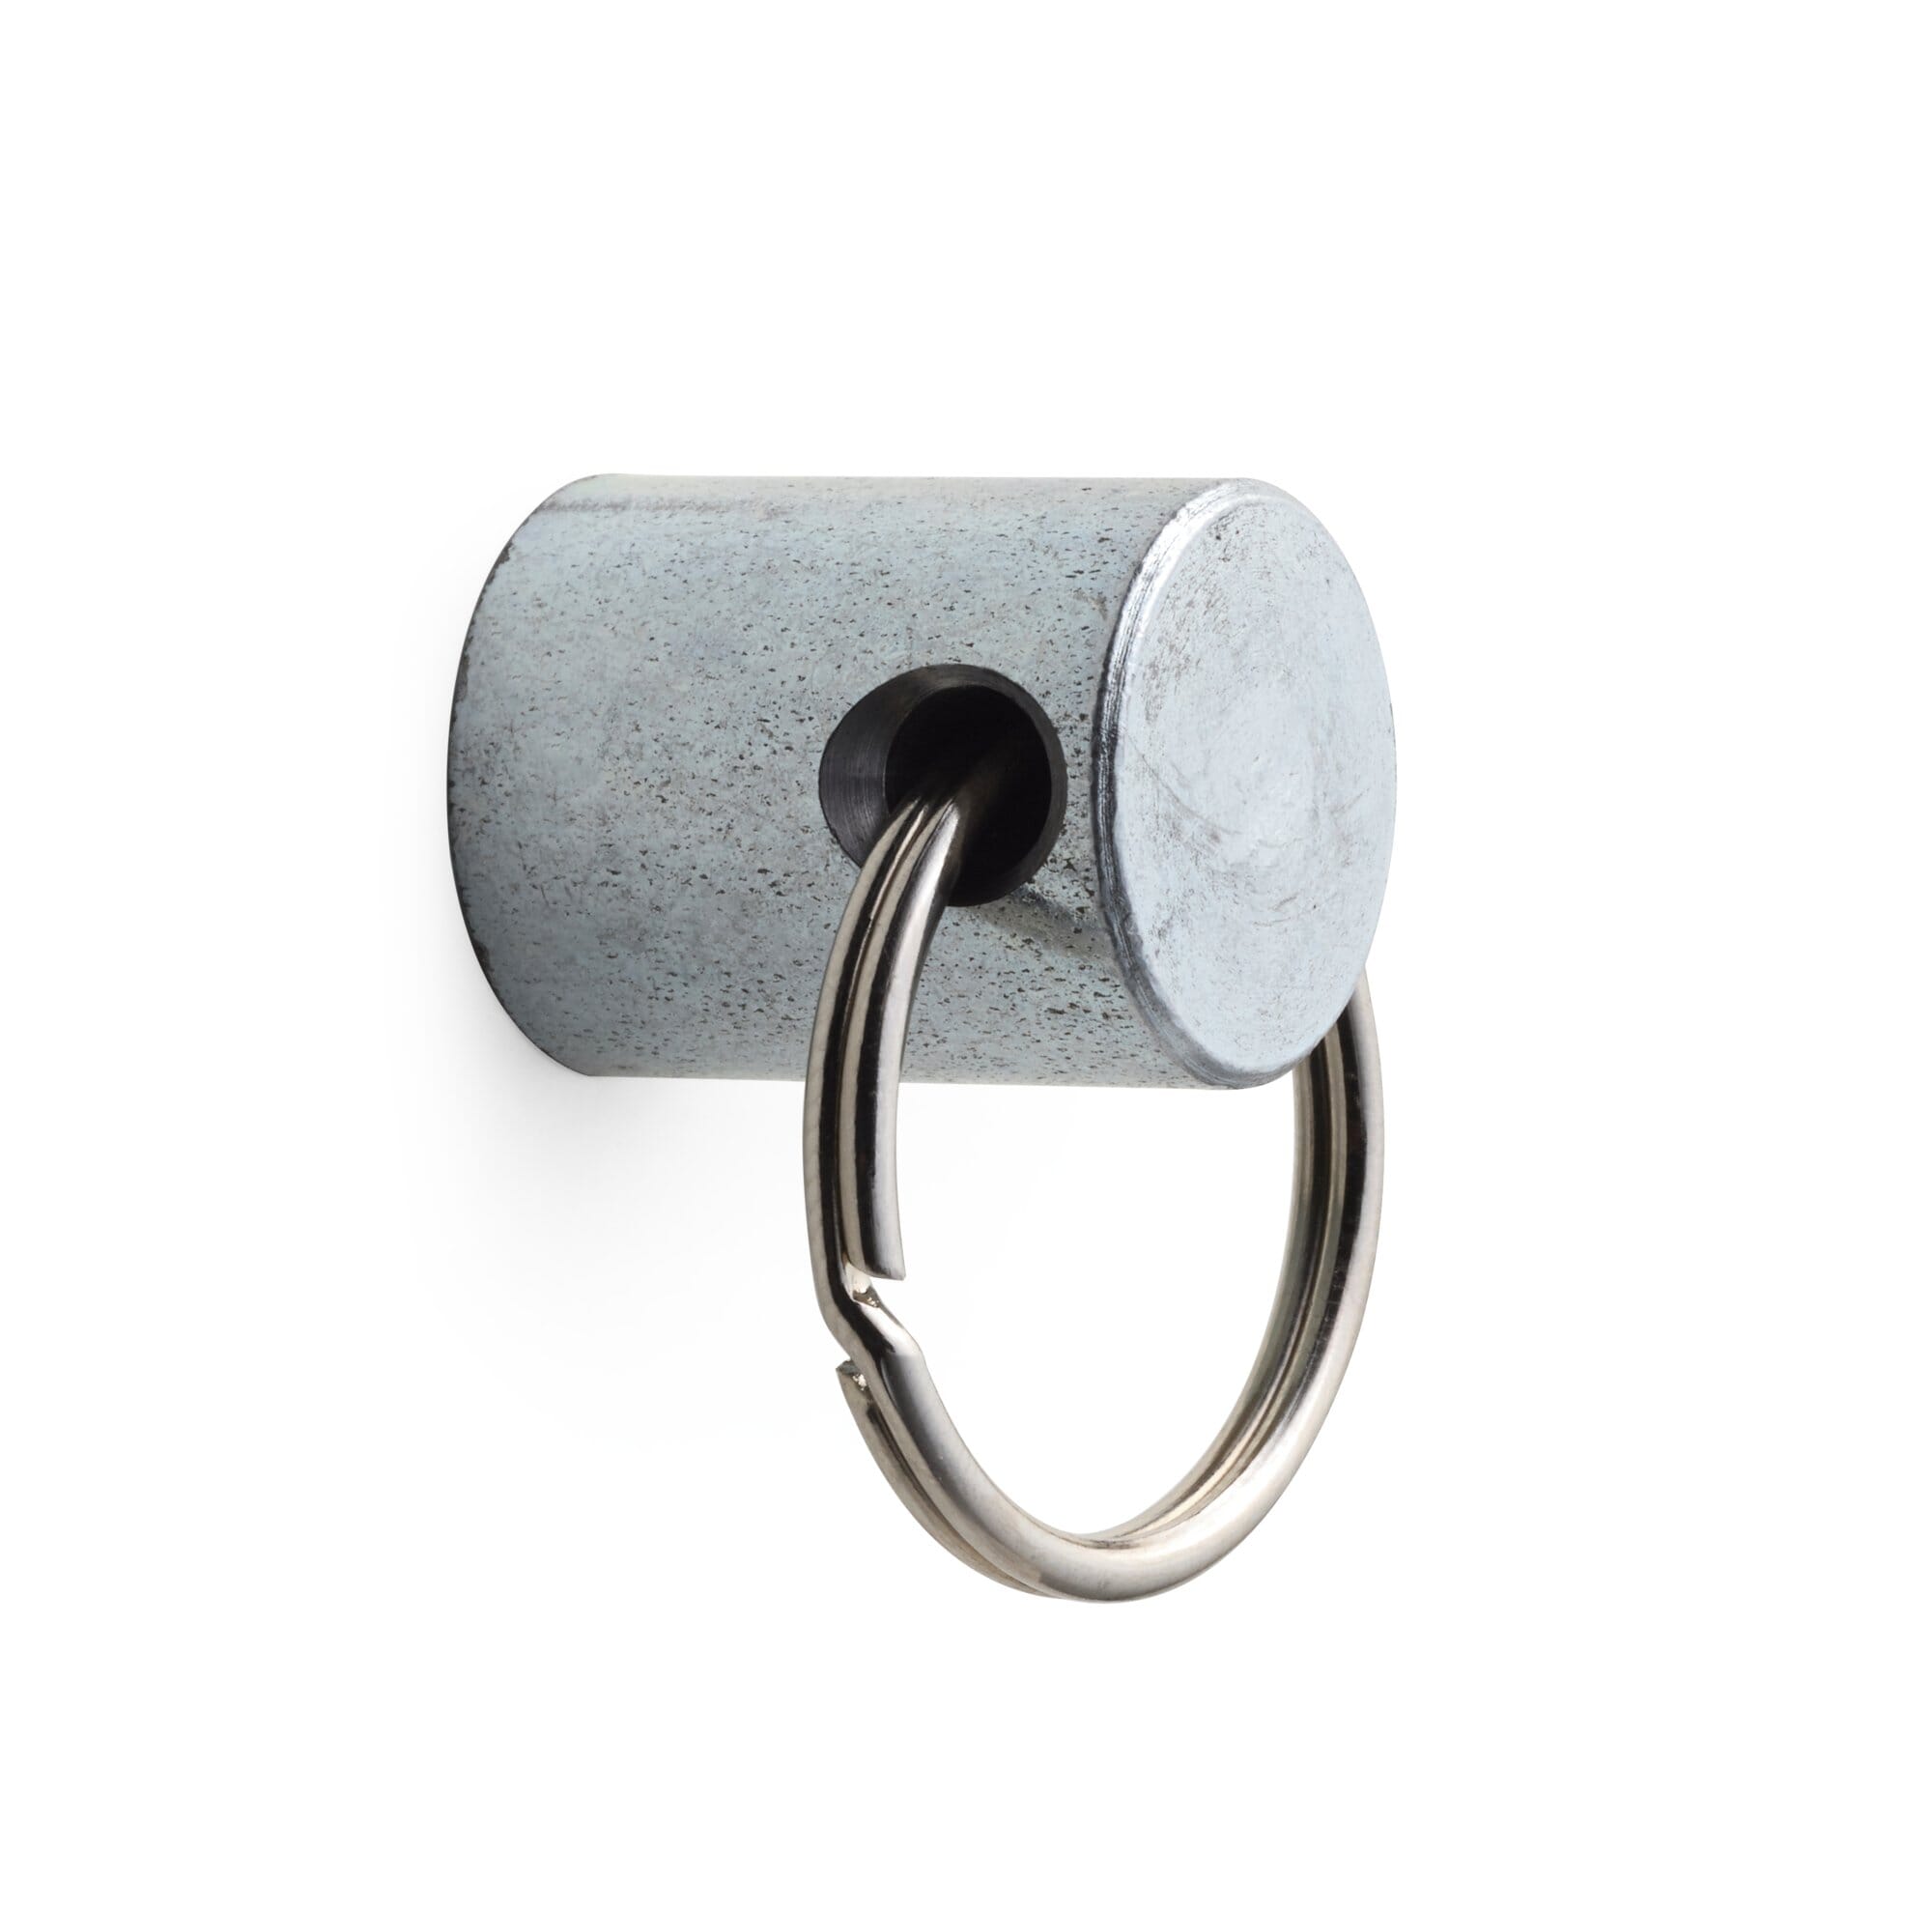 Groene bonen galerij Inzet Magnet with key ring | Manufactum